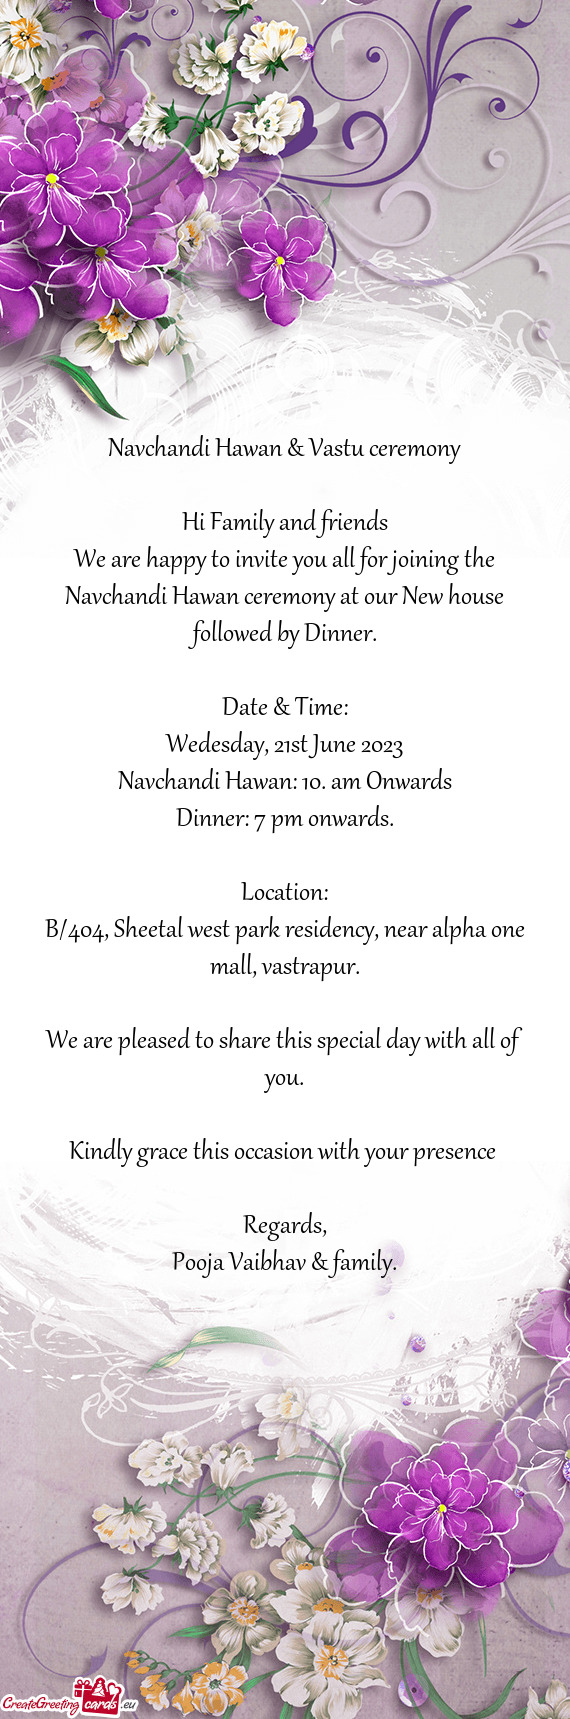 Navchandi Hawan & Vastu ceremony